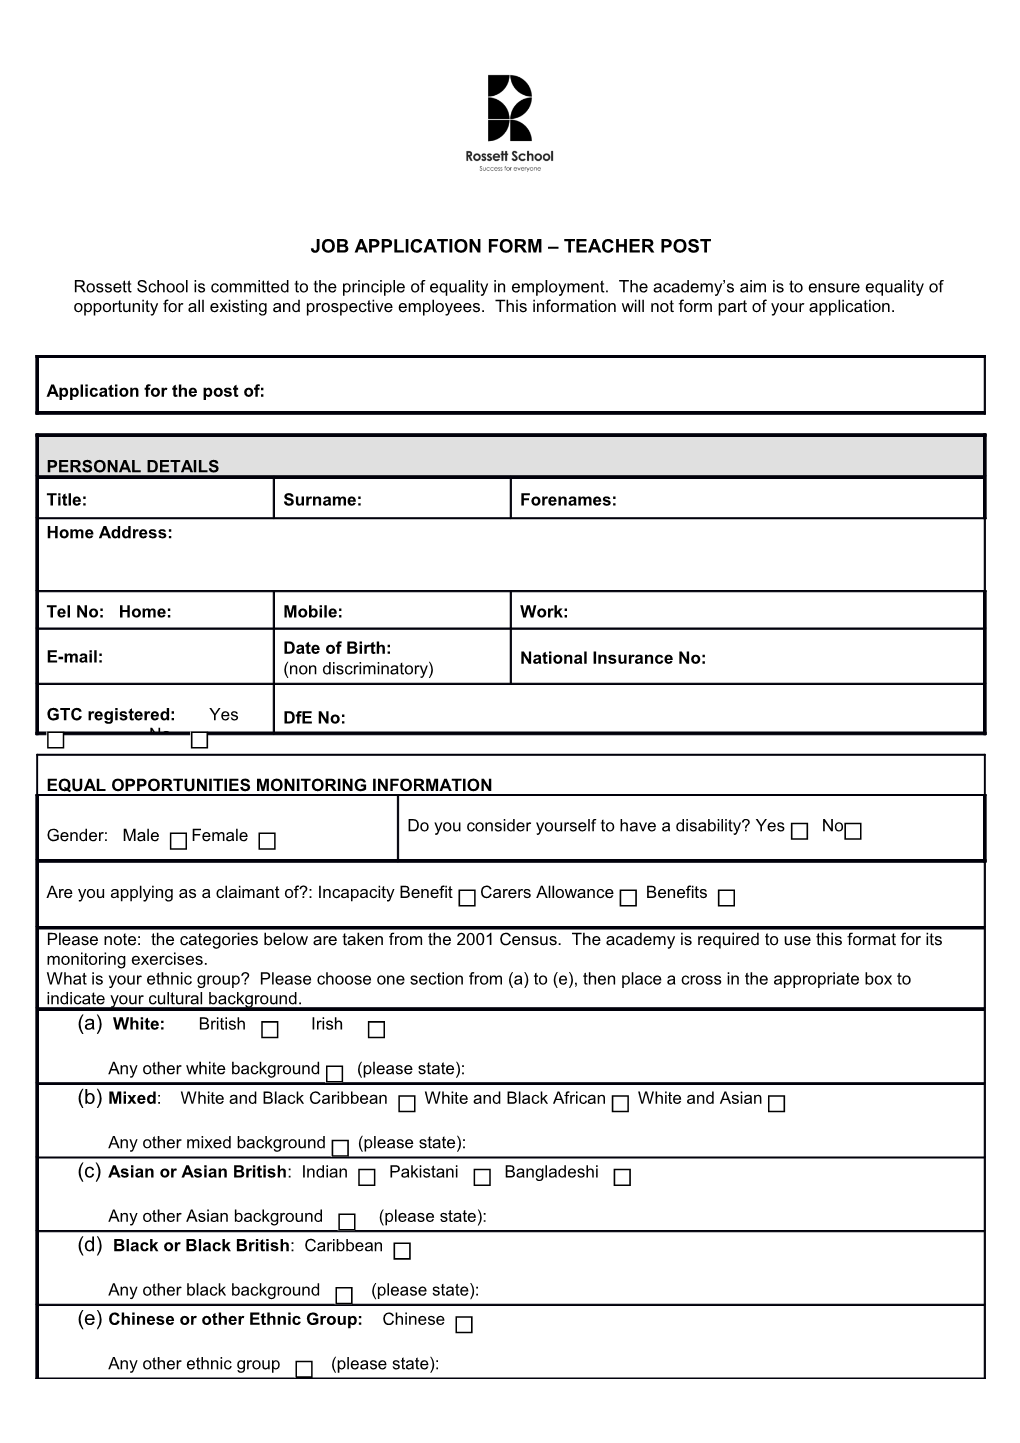 Job Application Form Teacher Post